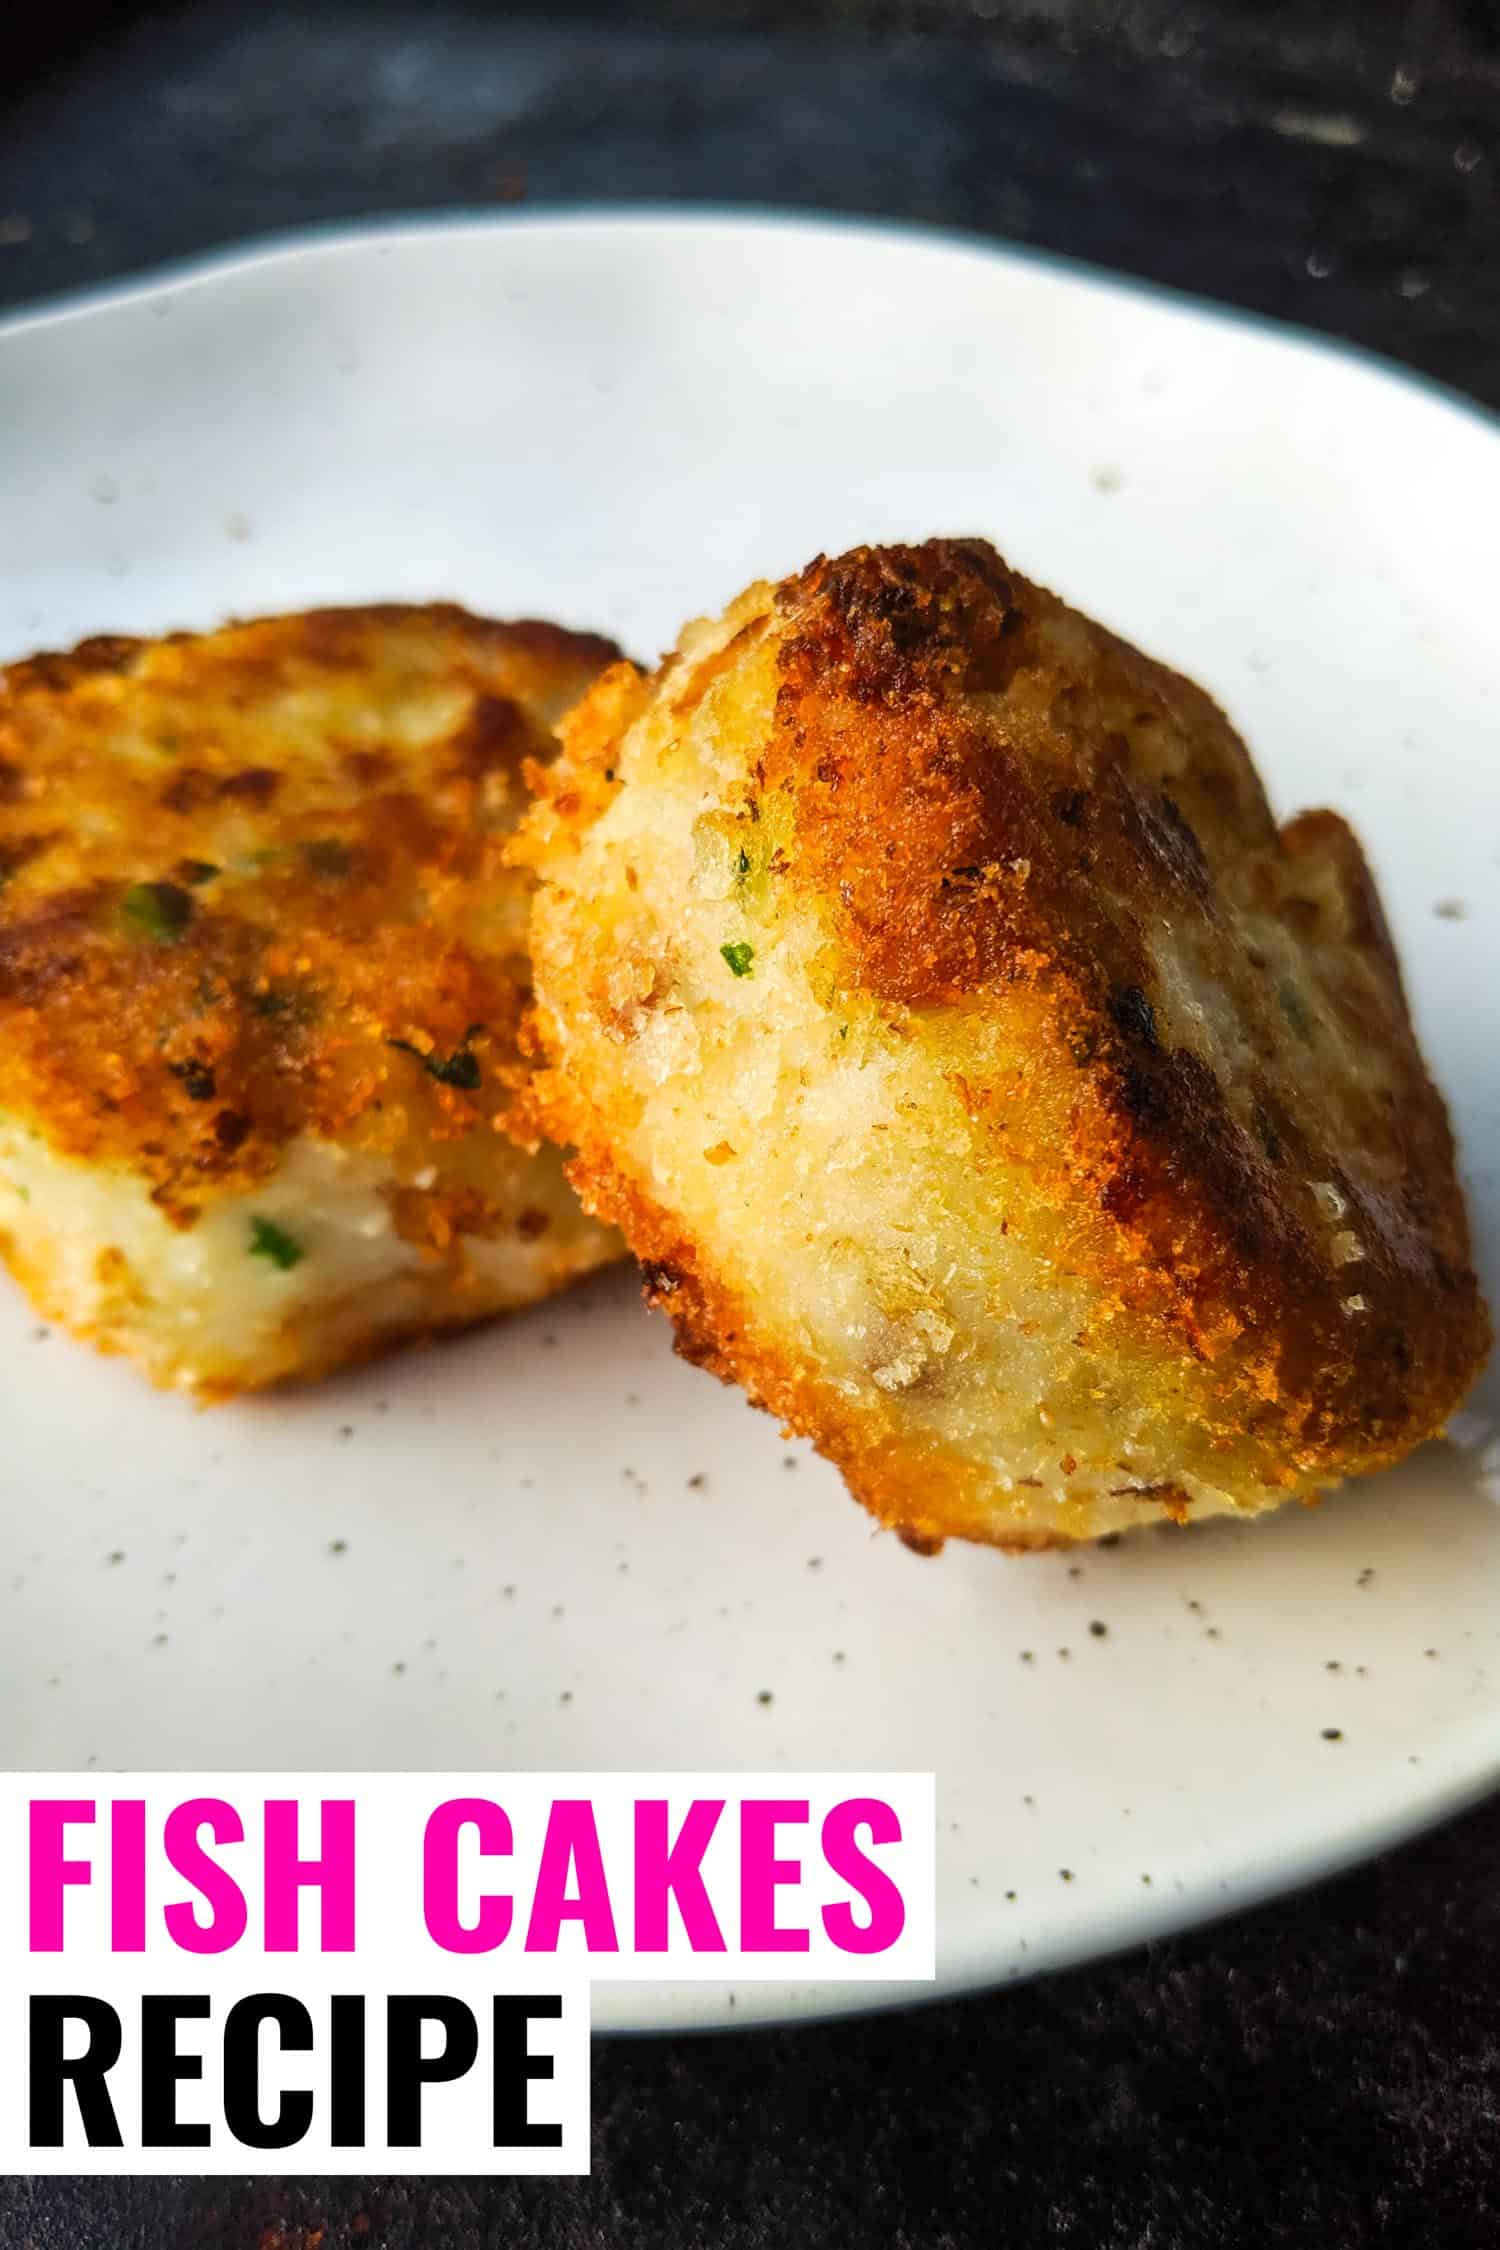 Nova Scotia cod fish cakes